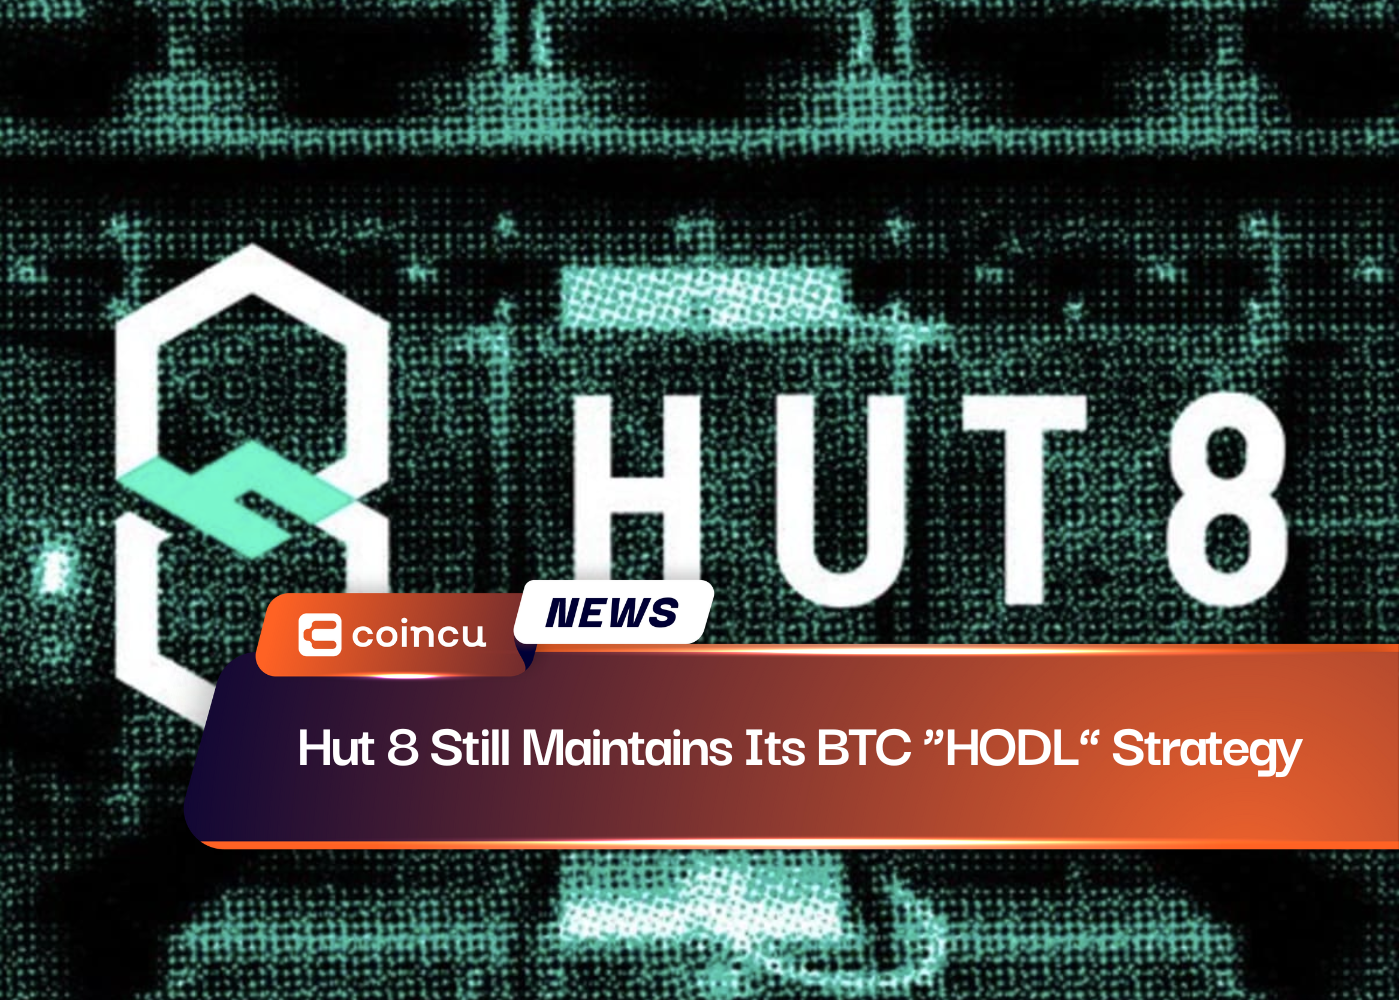 Hut 8 Still Maintains Its BTC “HODL” Strategy